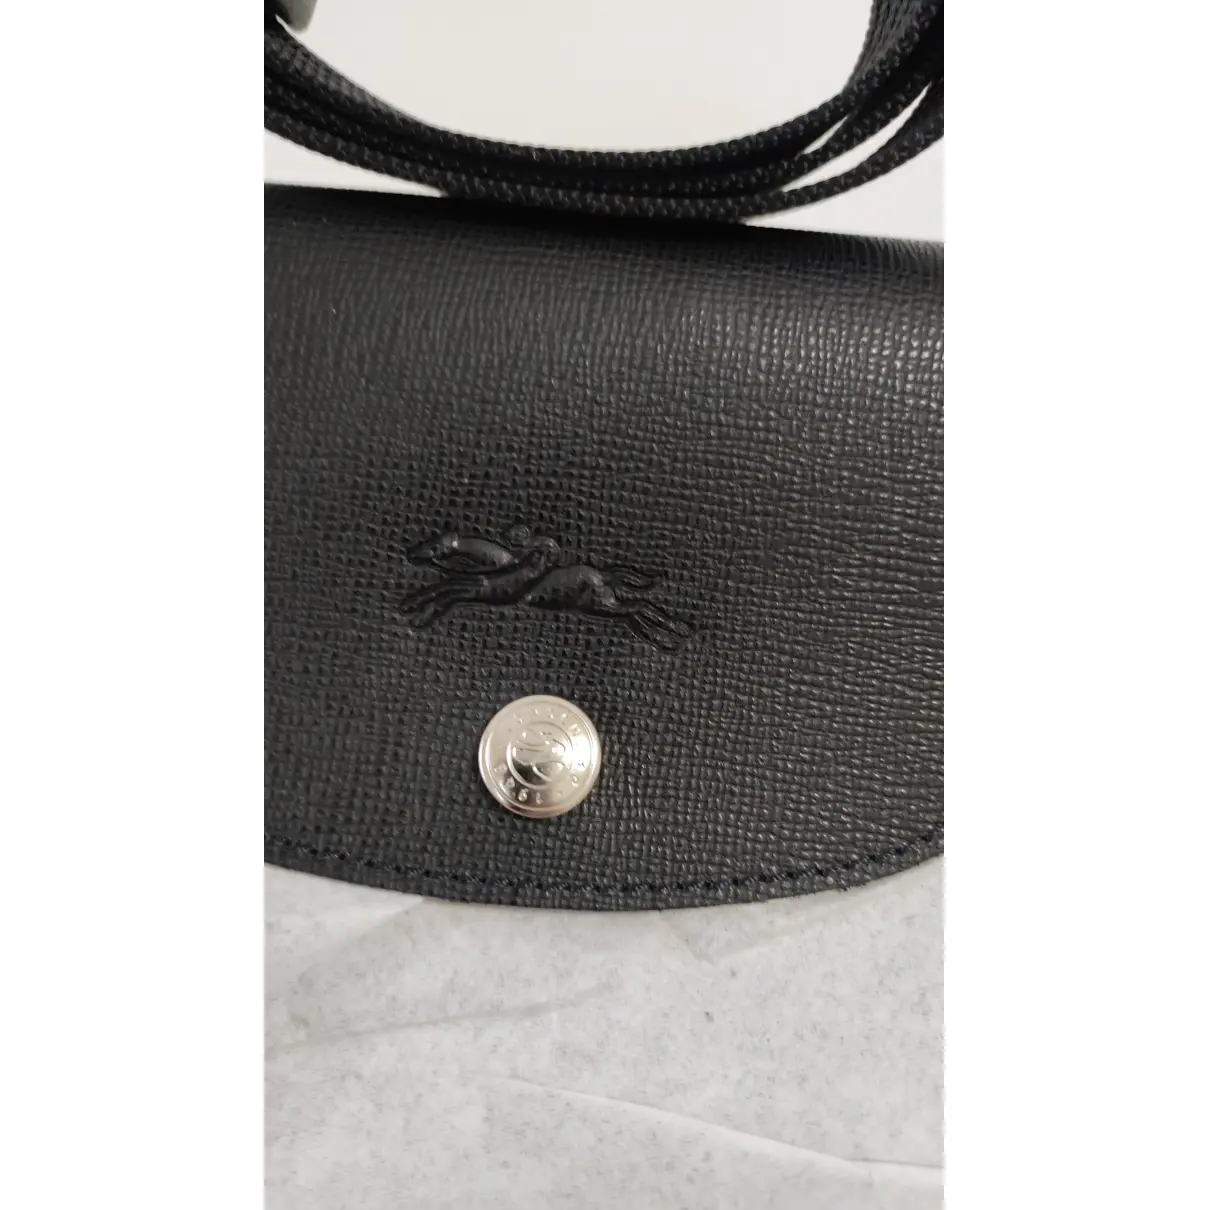 Buy Longchamp Pliage crossbody bag online